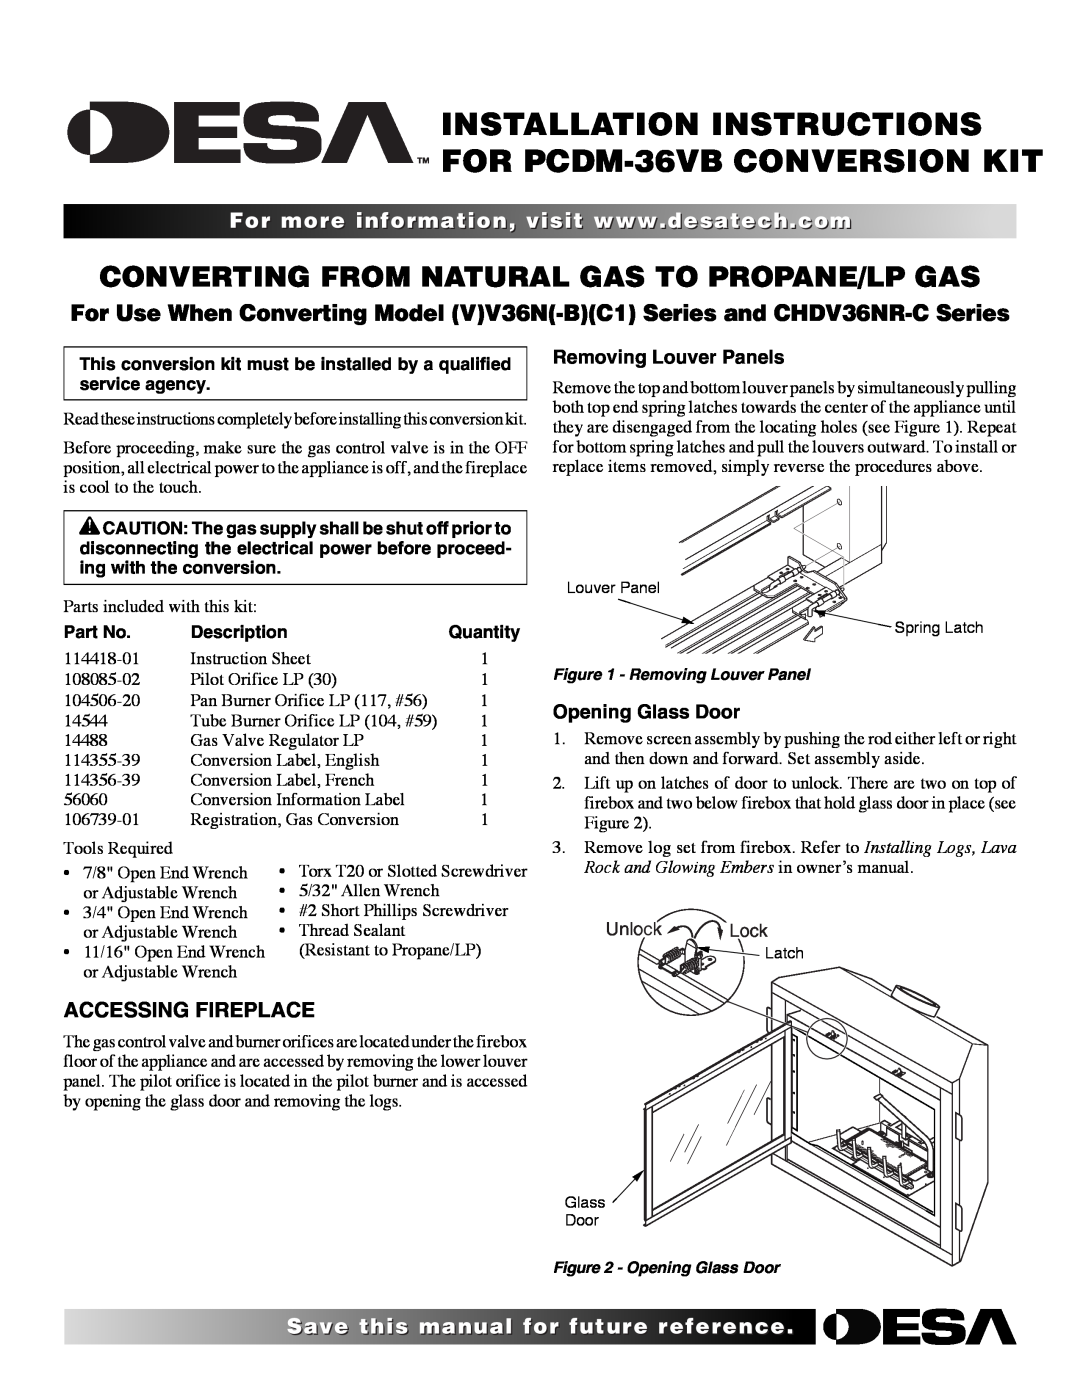 Desa PCDM-36VB installation instructions Accessing Fireplace, Removing Louver Panels, Opening Glass Door, Unlock Lock 